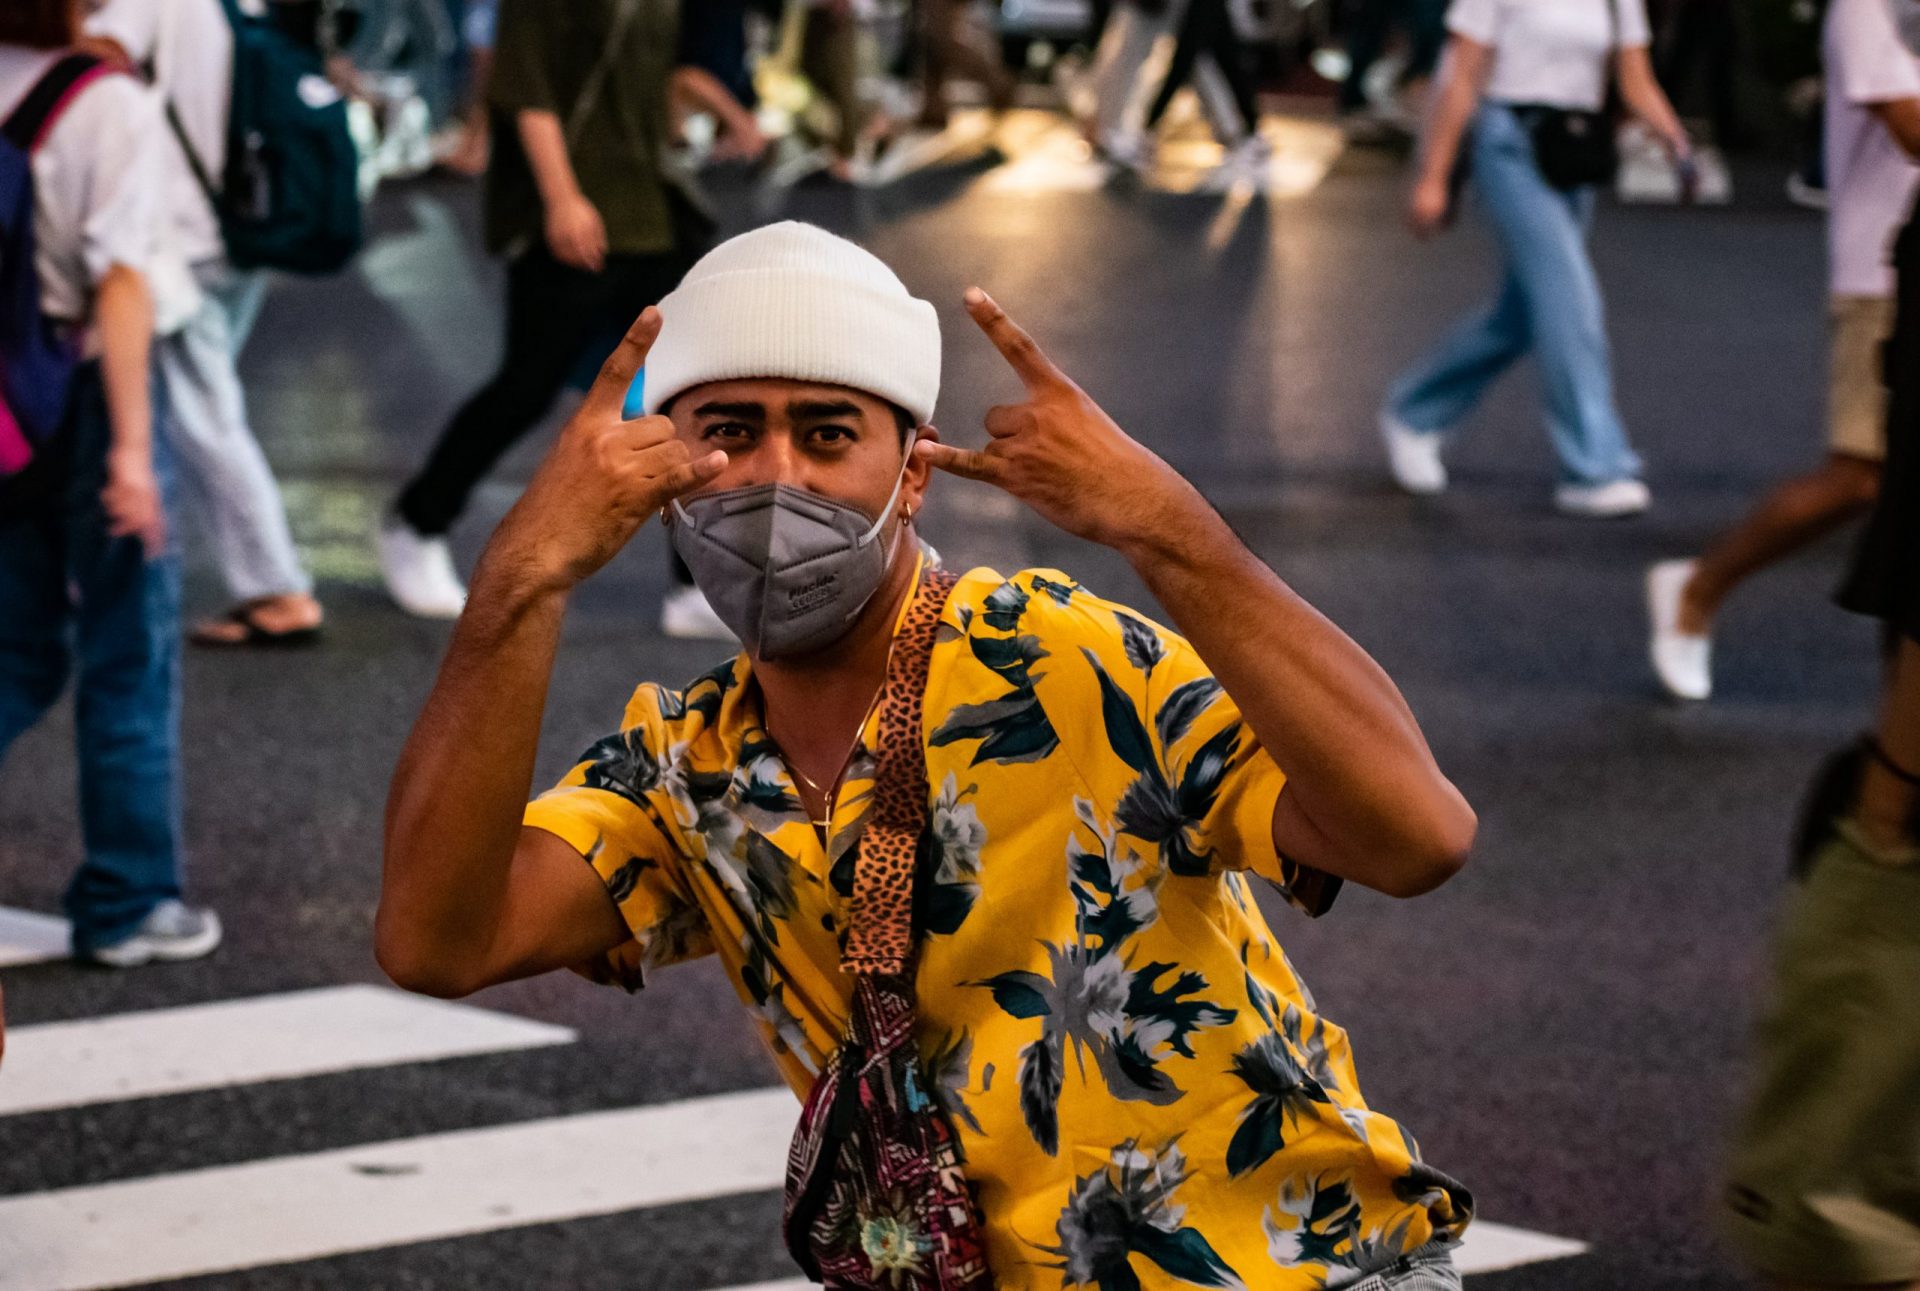 A high member of Shibuya crossing